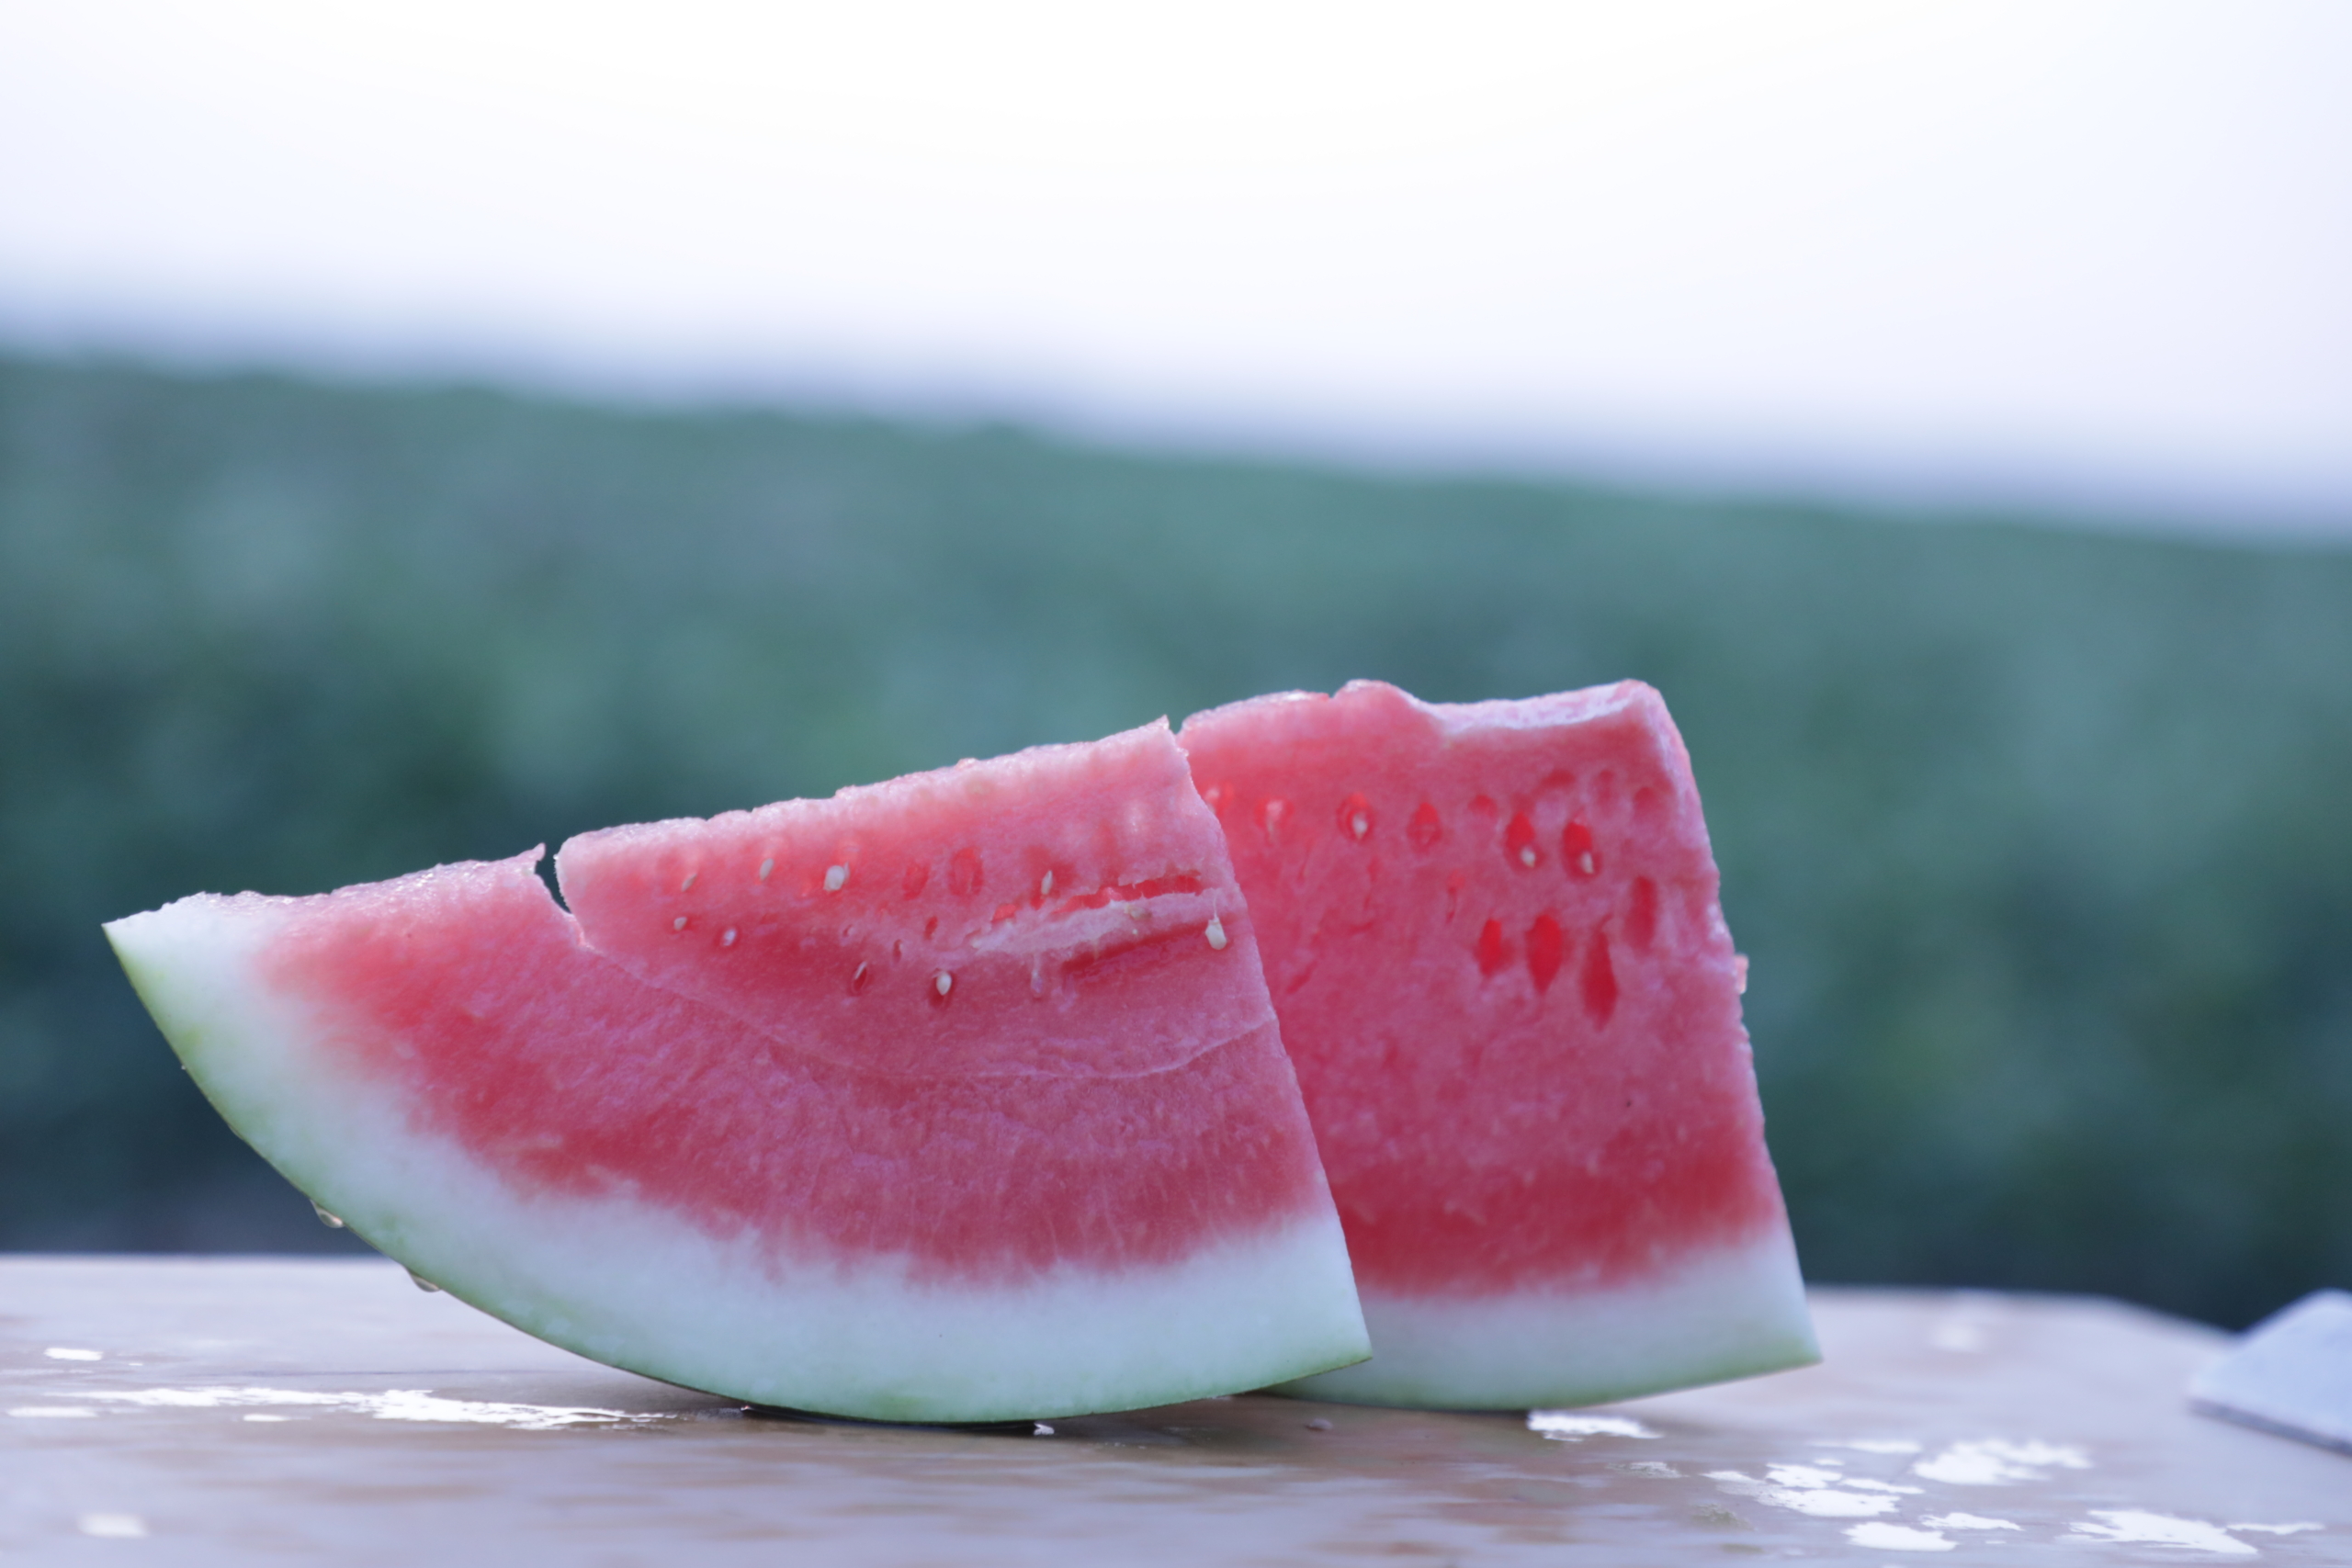 Texas watermelon growers report good yields, high quality – Texas Farm Bureau